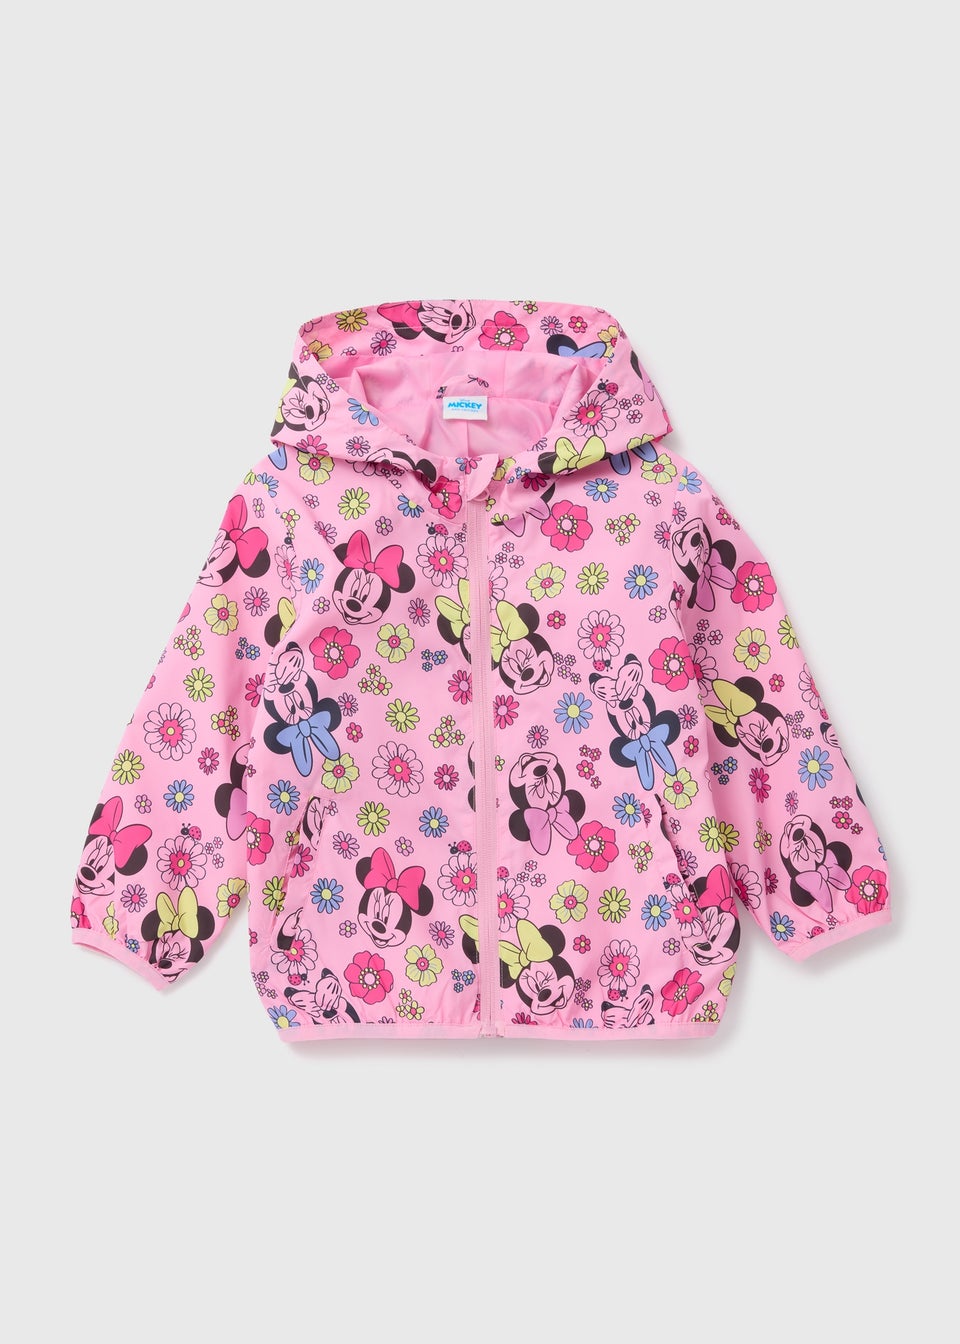 Girl's Coats & Jackets  Winter, Waterproof & Raincoat - Matalan